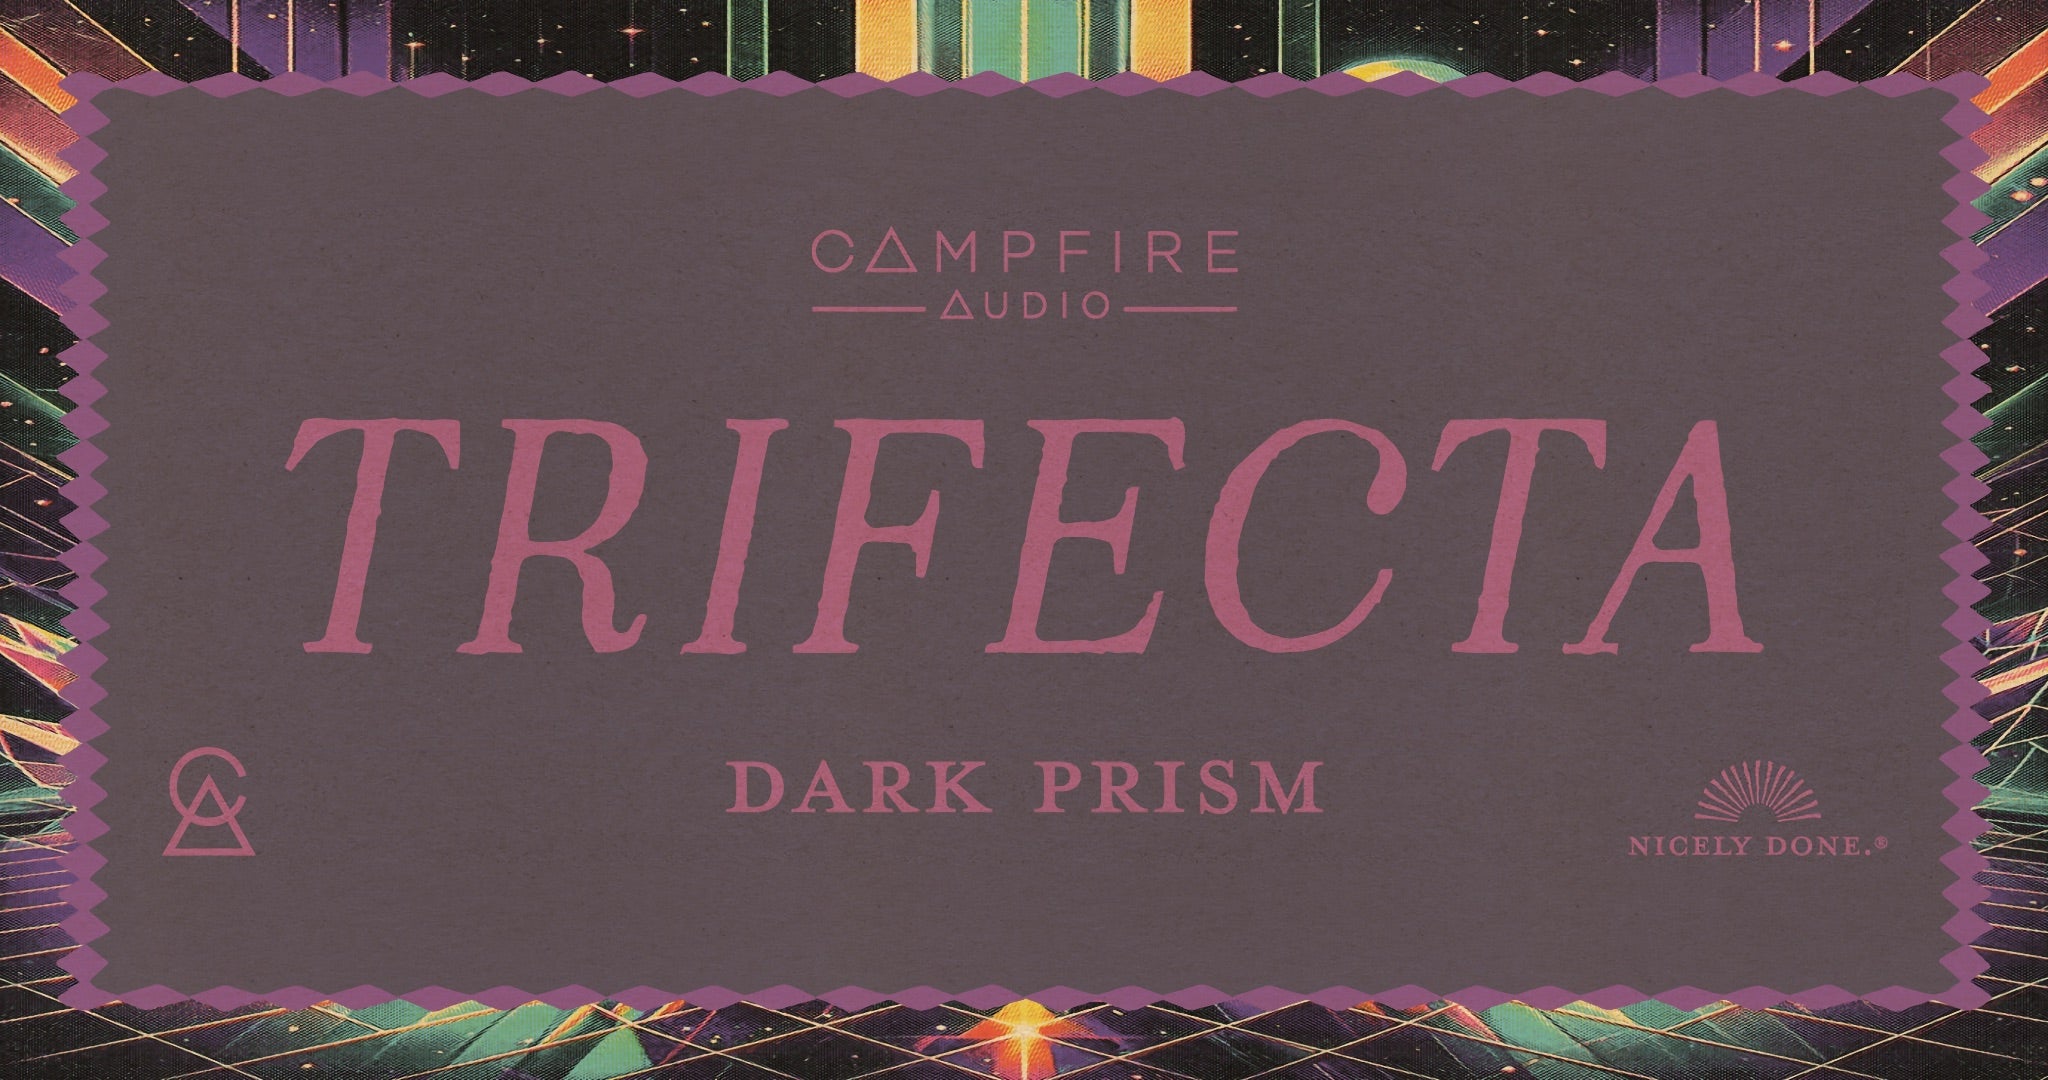 Campfire Trifecta Dark Prism banner with spectral border